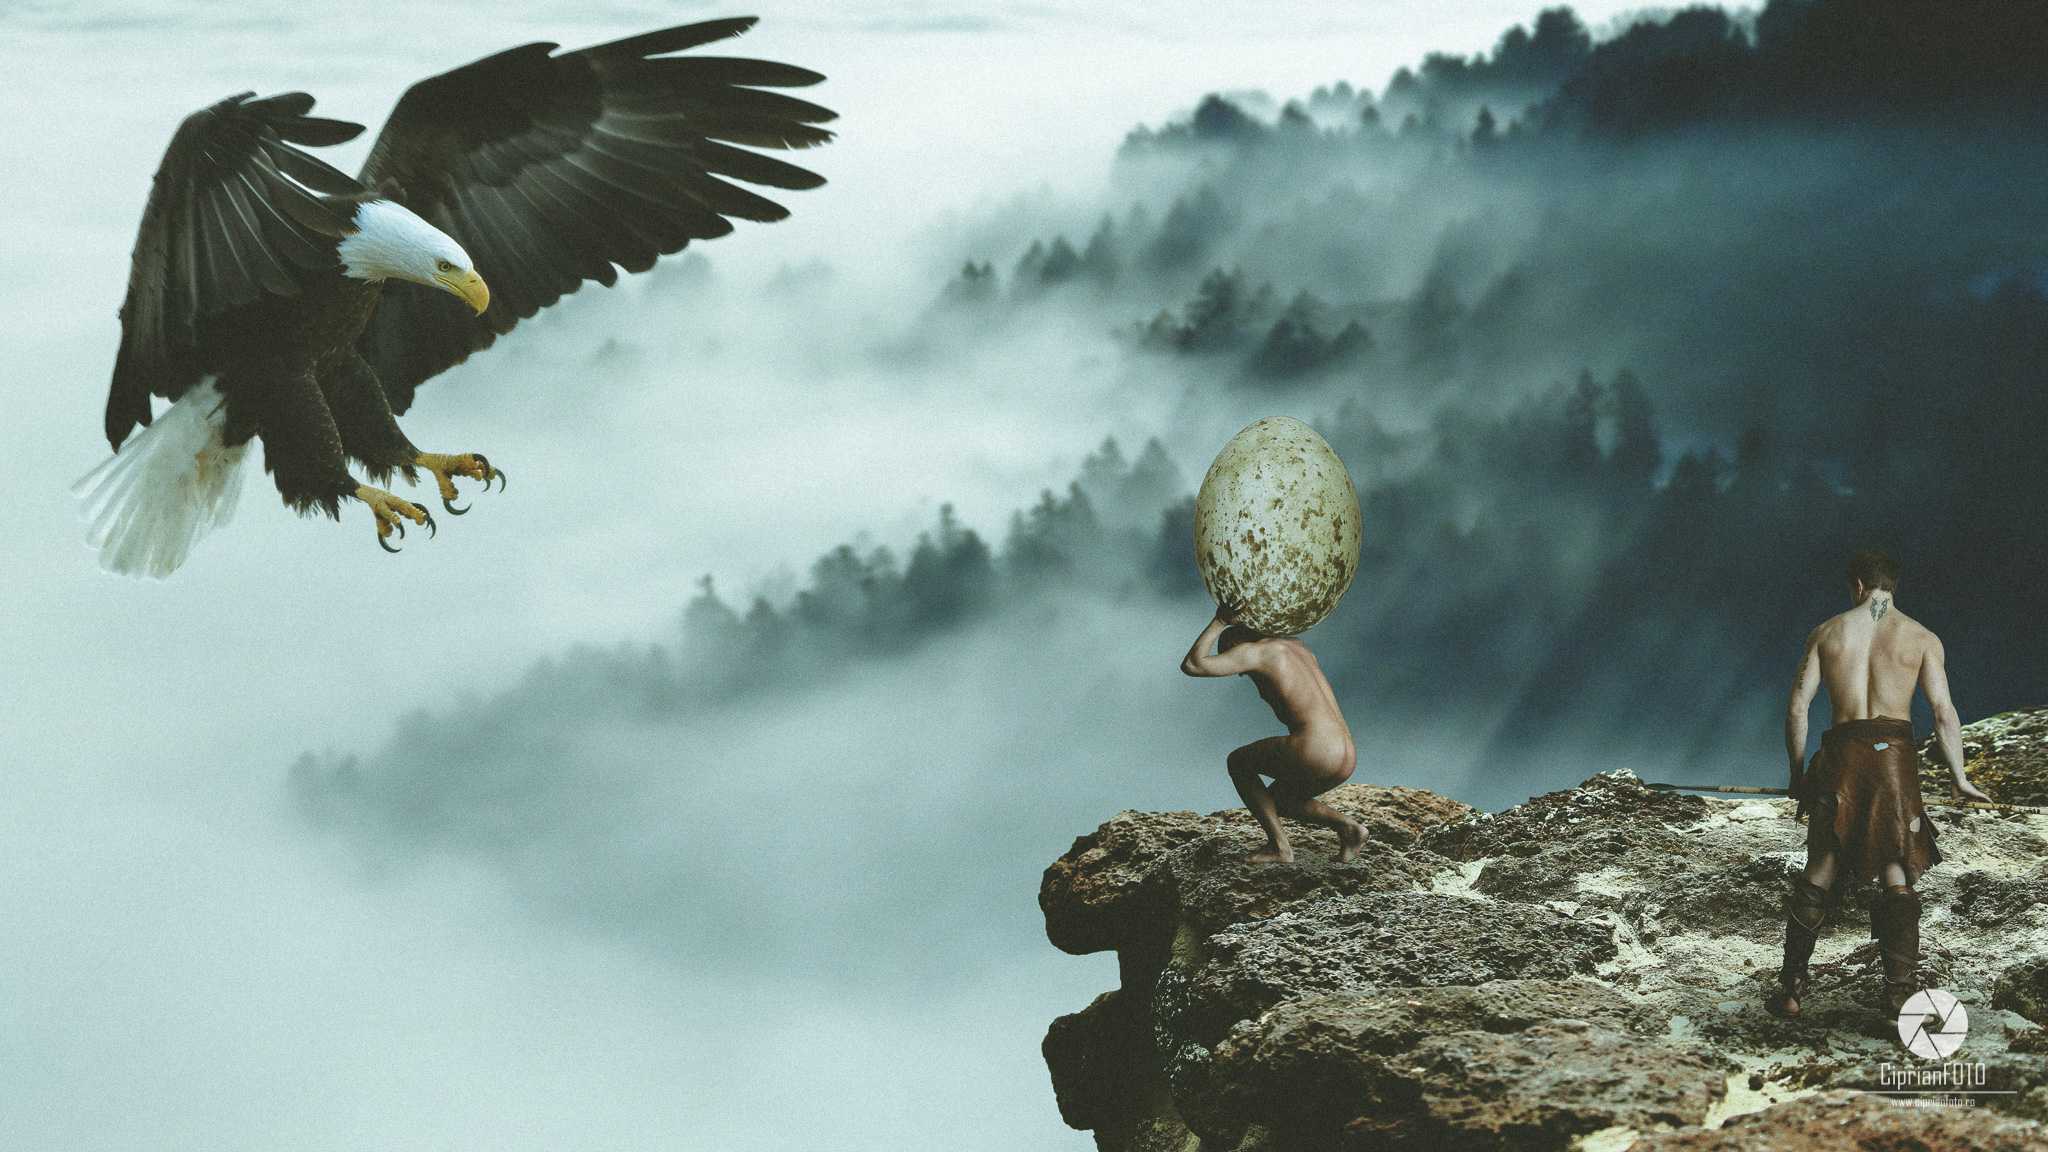 The Eagle Egg, Photoshop Manipulation Tutorial, CiprianFOTO